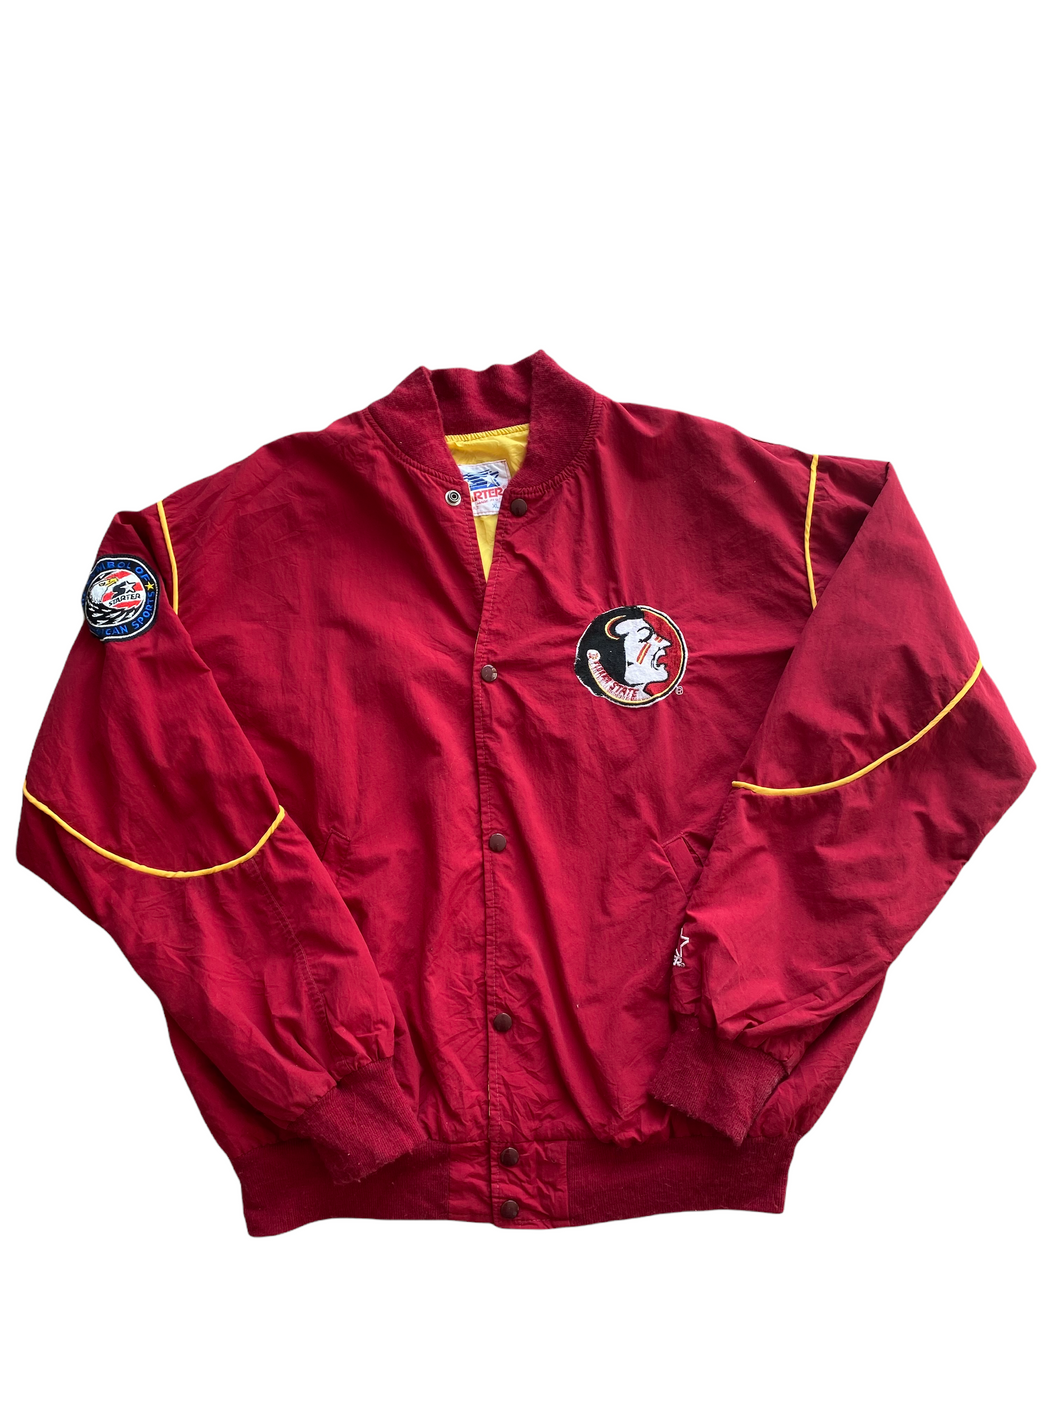 Vintage Starter Sports Jacket (XL)